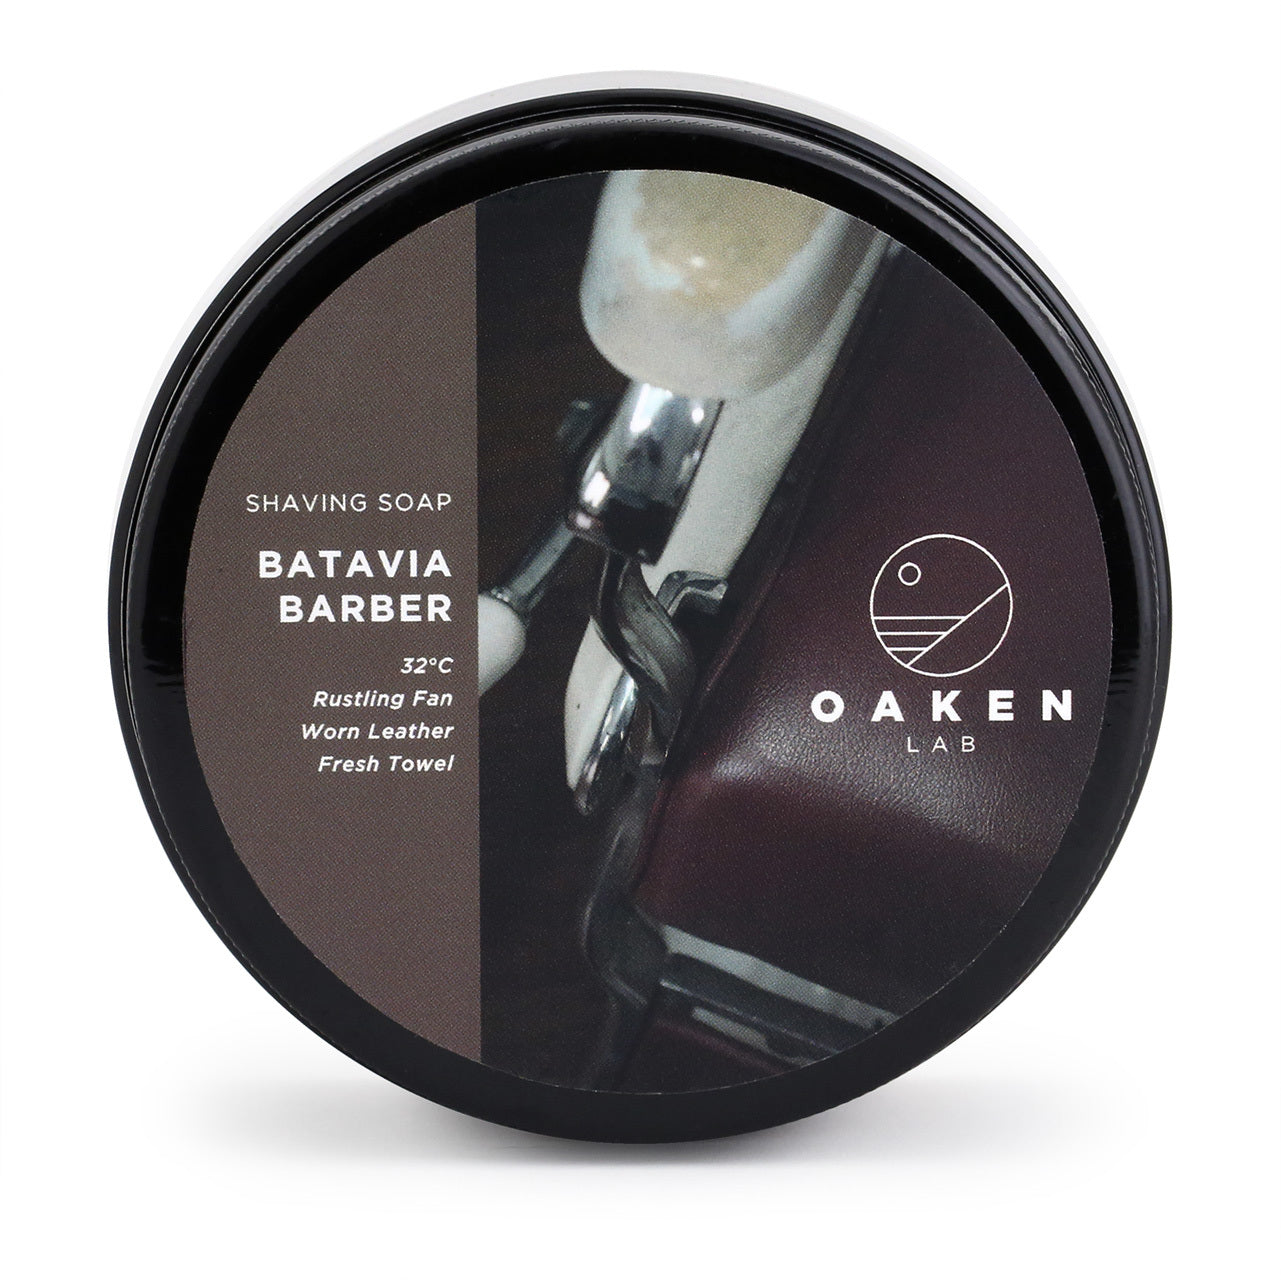 Oaken Lab artisan shaving soap, top view - Batavia Barber